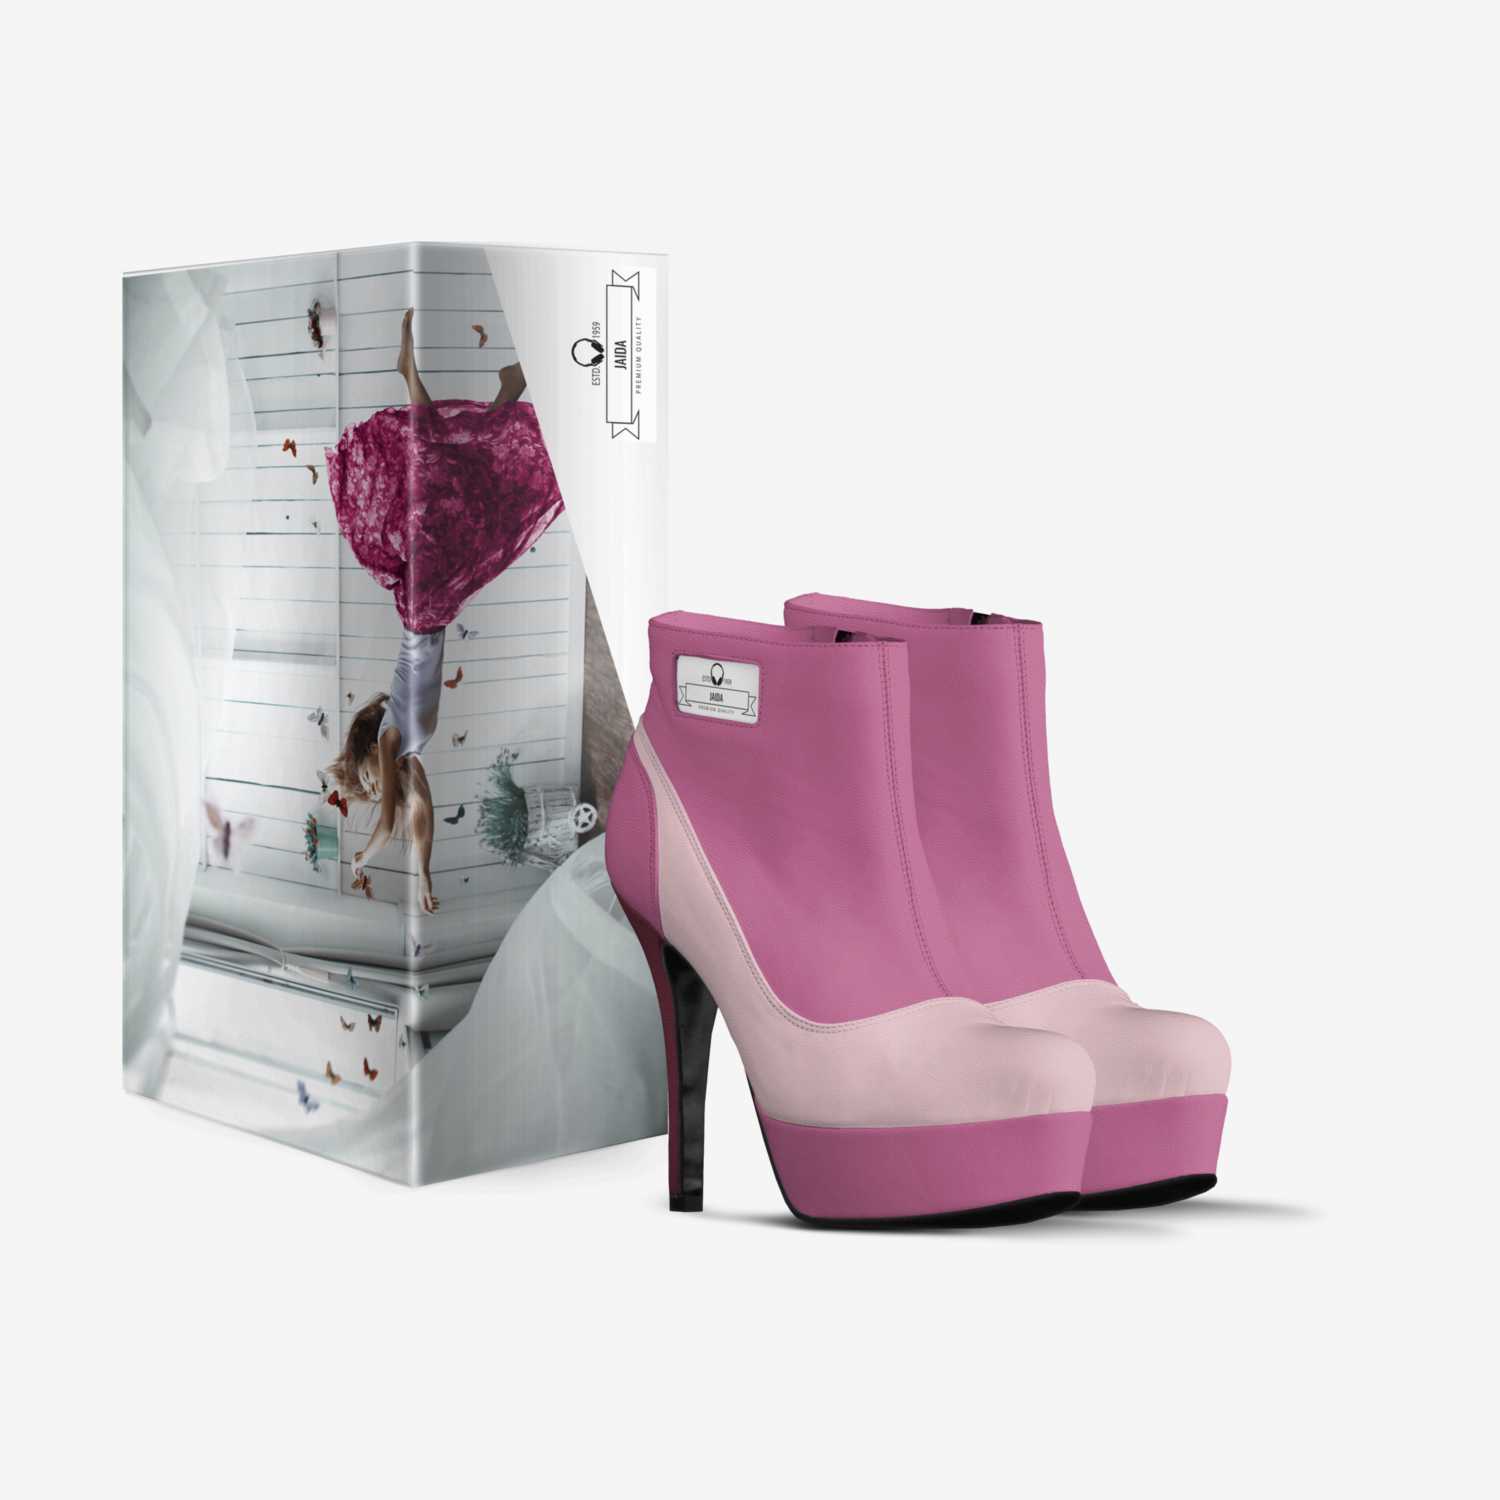 jaida custom made in Italy shoes by J Jones | Box view